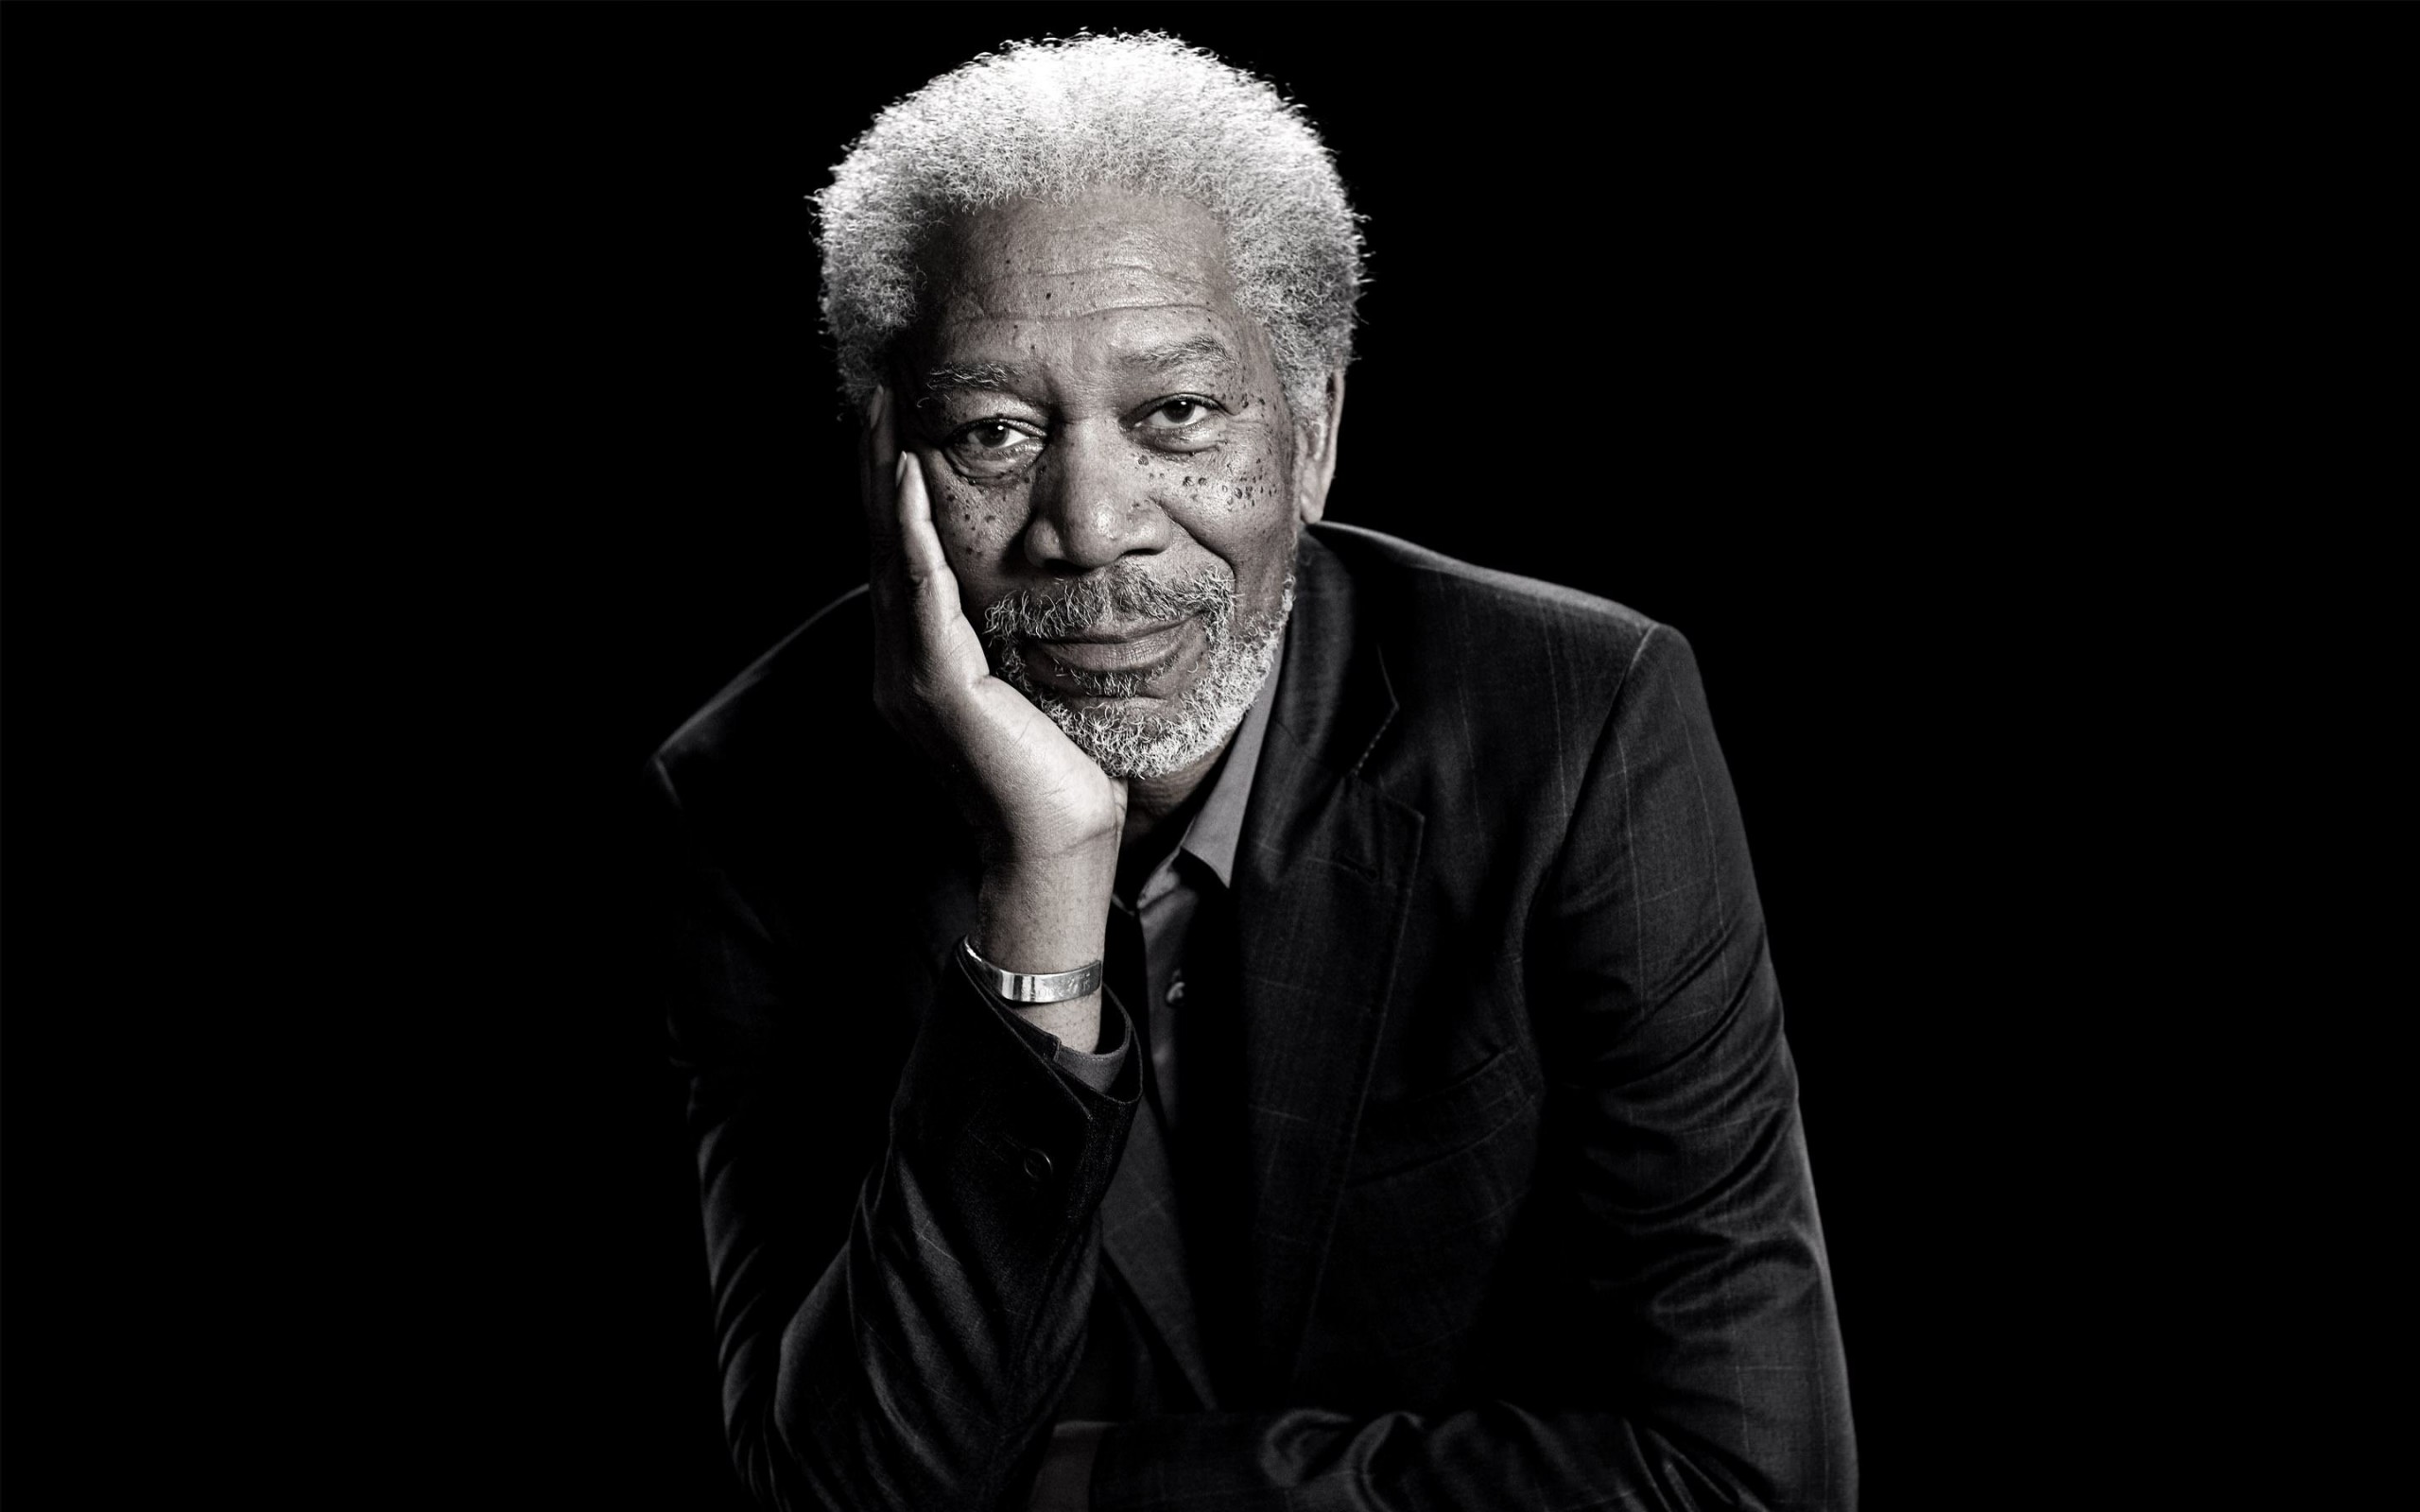 Morgan Freeman Portrait Wallpaper for Desktop 2560x1600